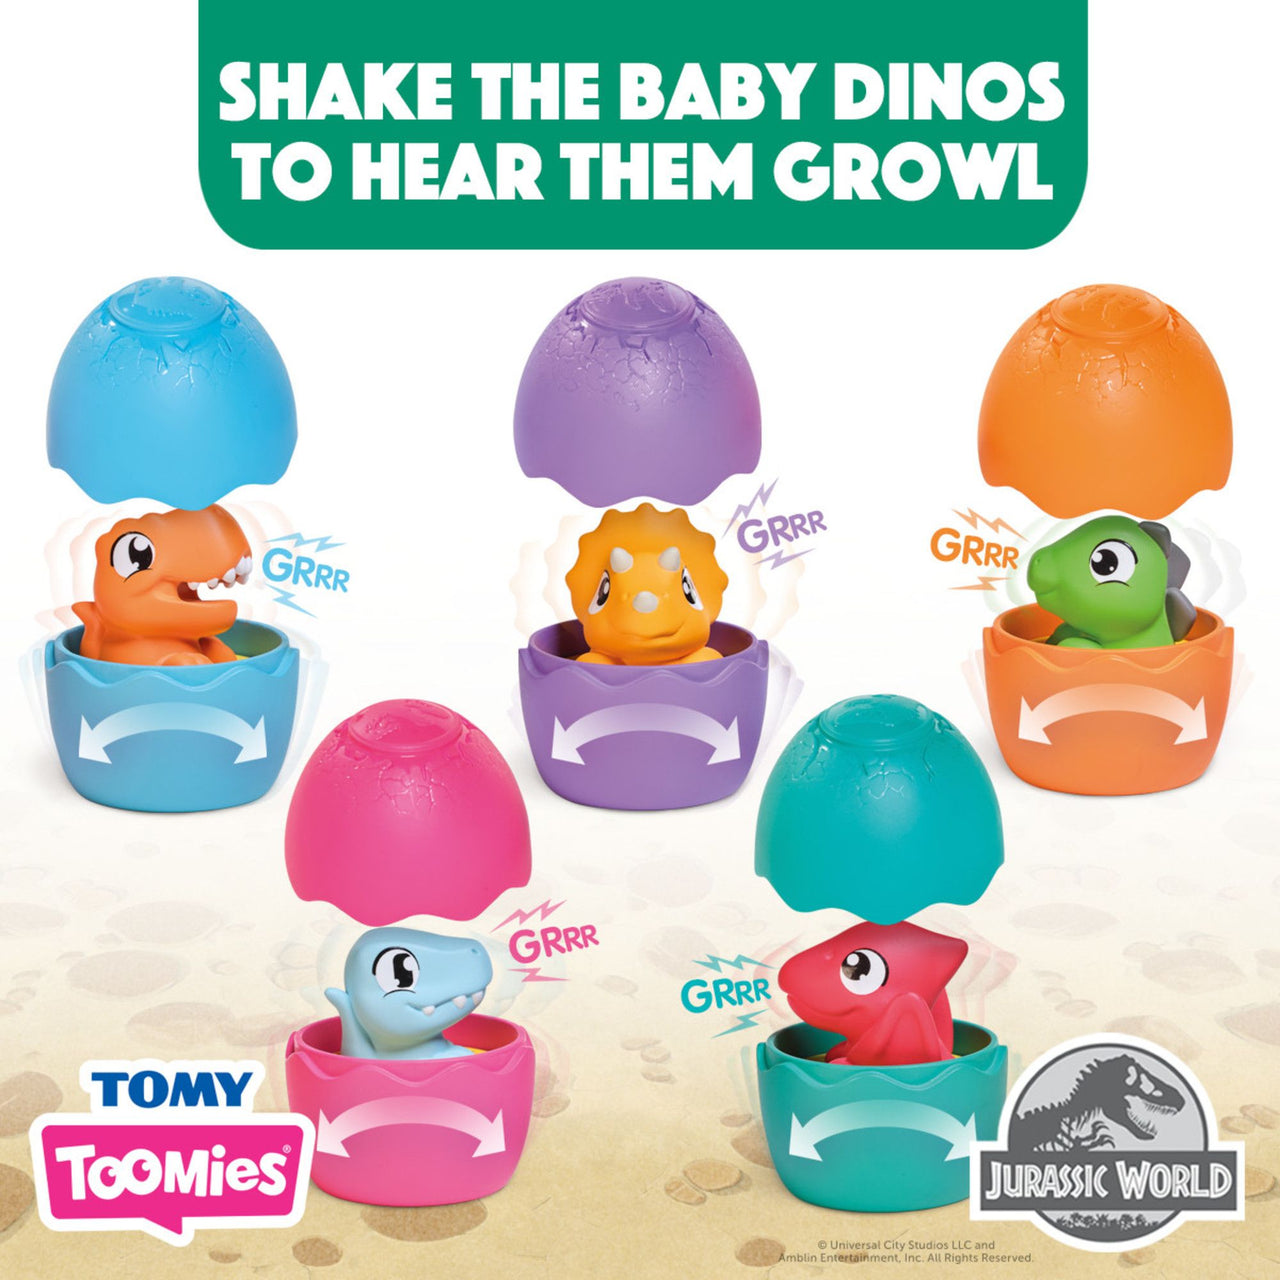 TOOMIES - Spin & Hatch Dino Eggs